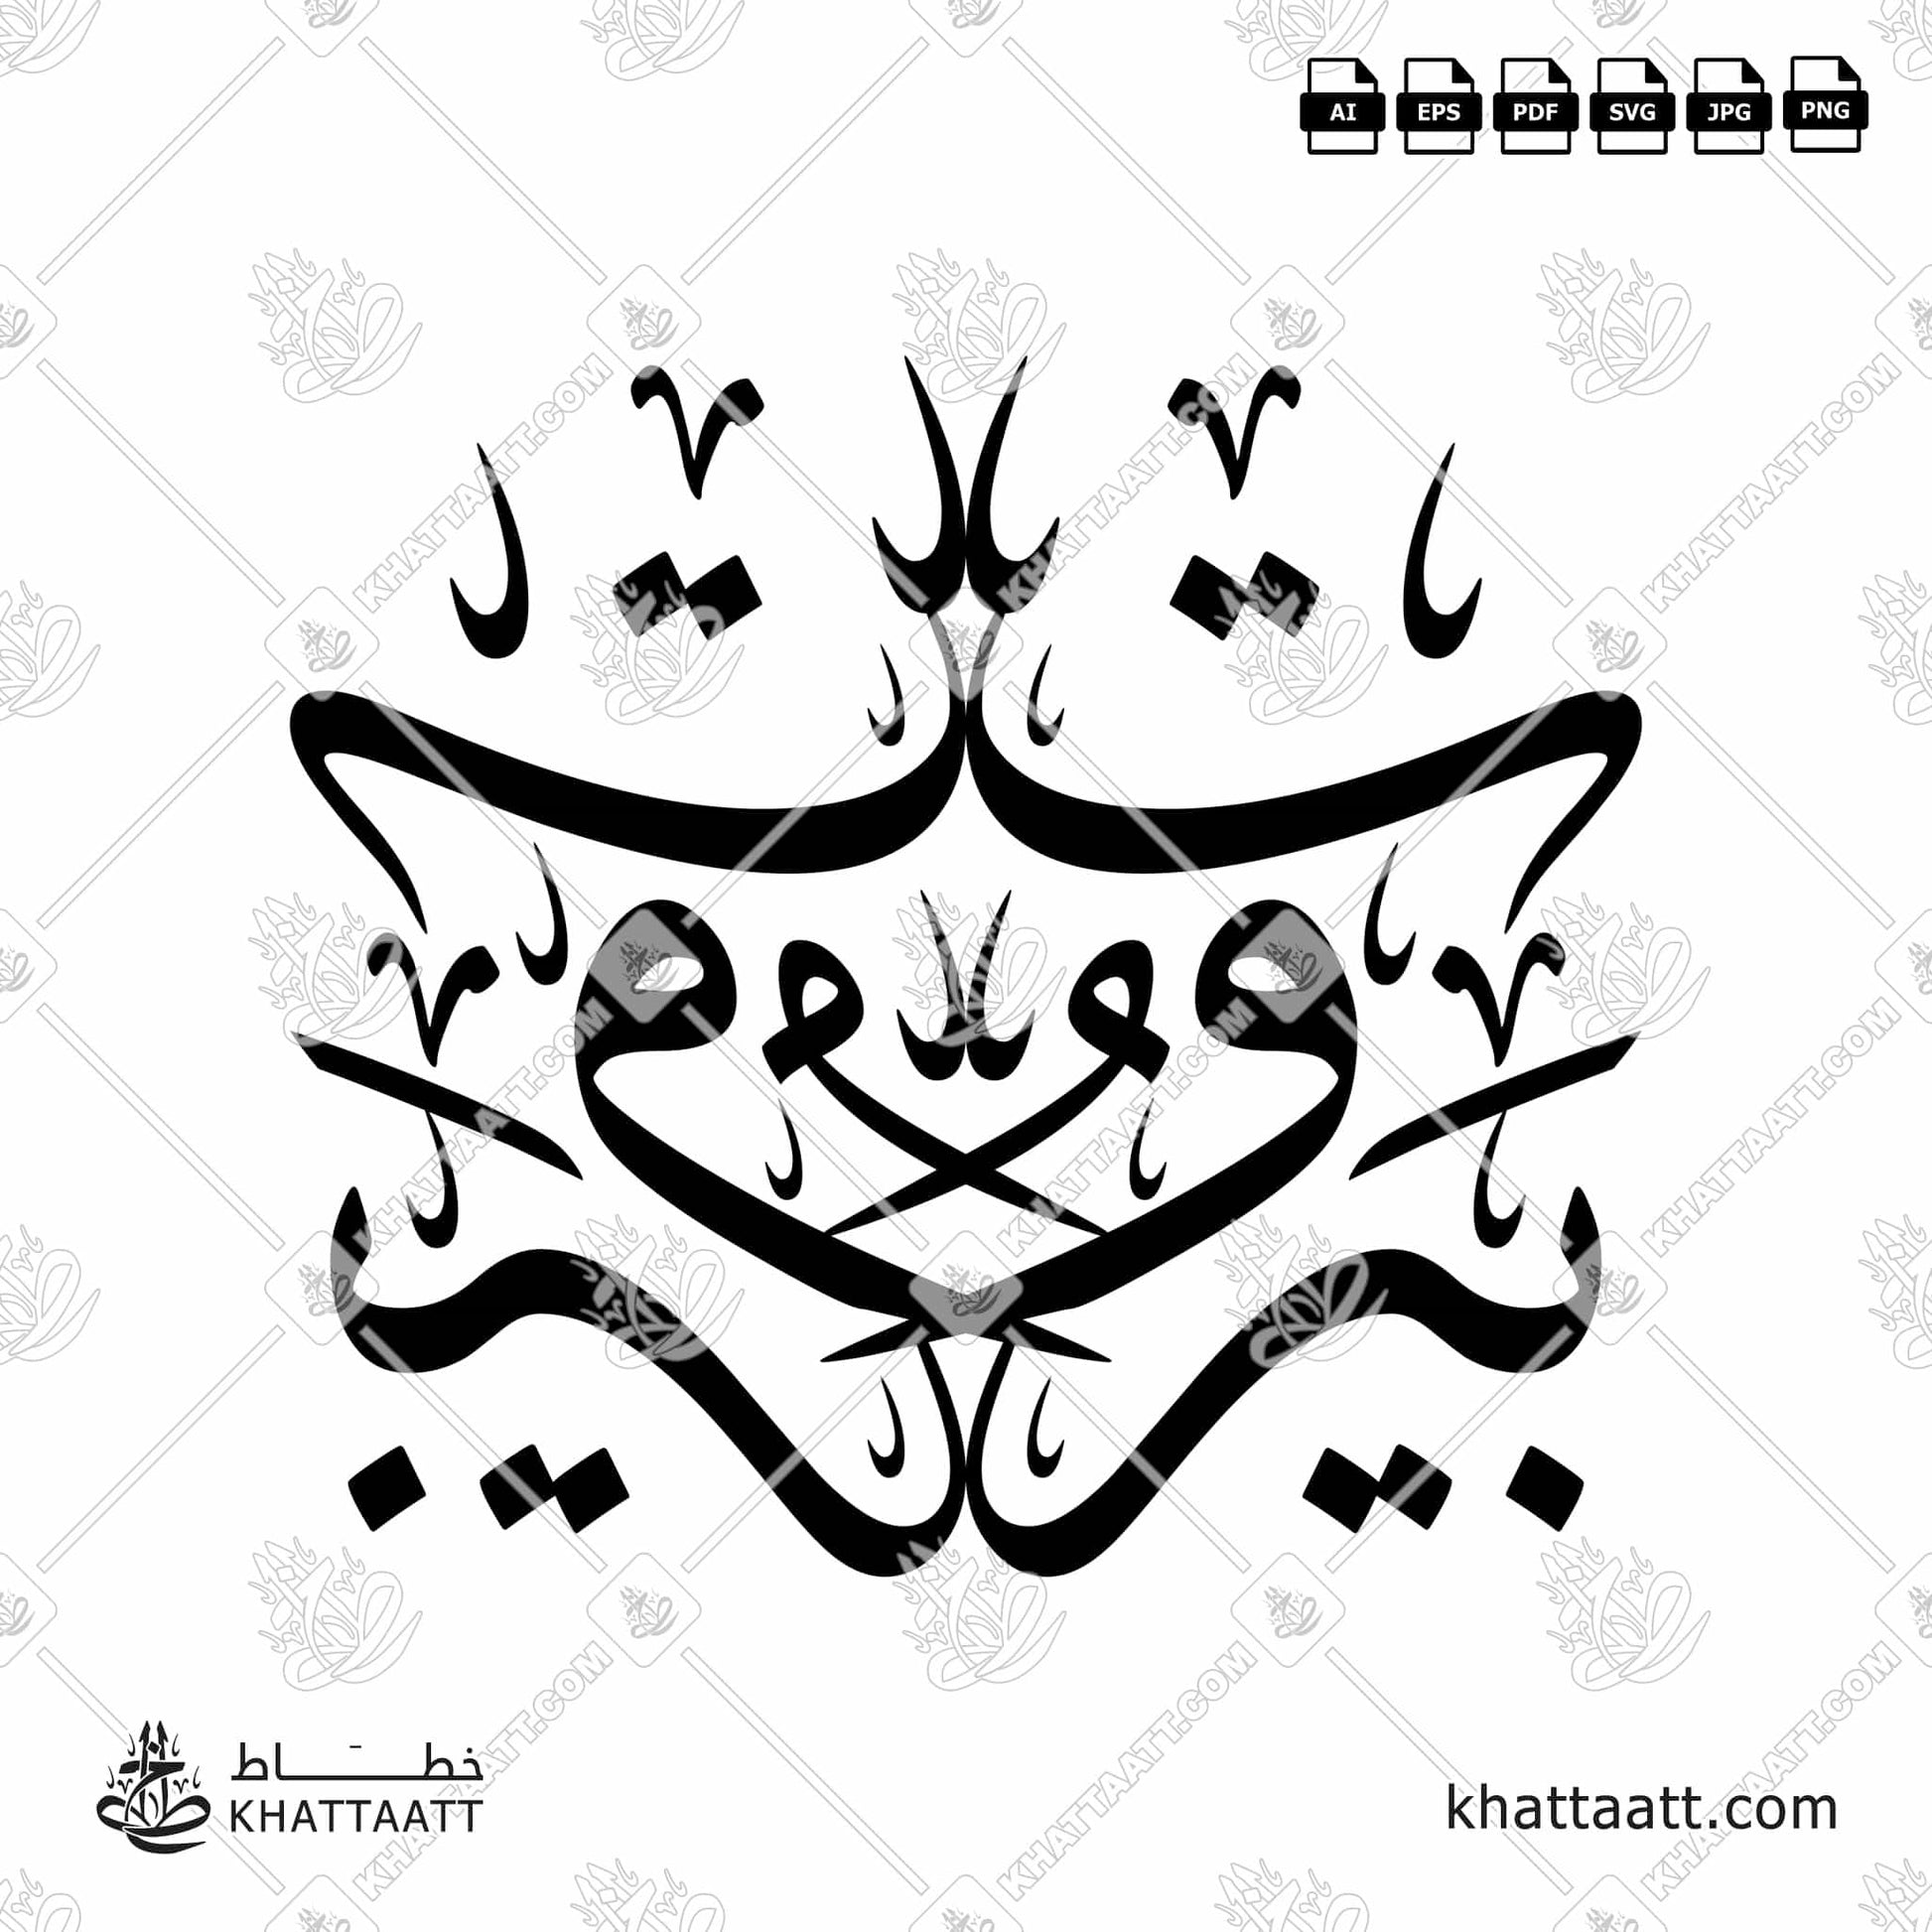 Arabic Calligraphy of Beirut - بيروت in Thuluth Script خط الثلث.